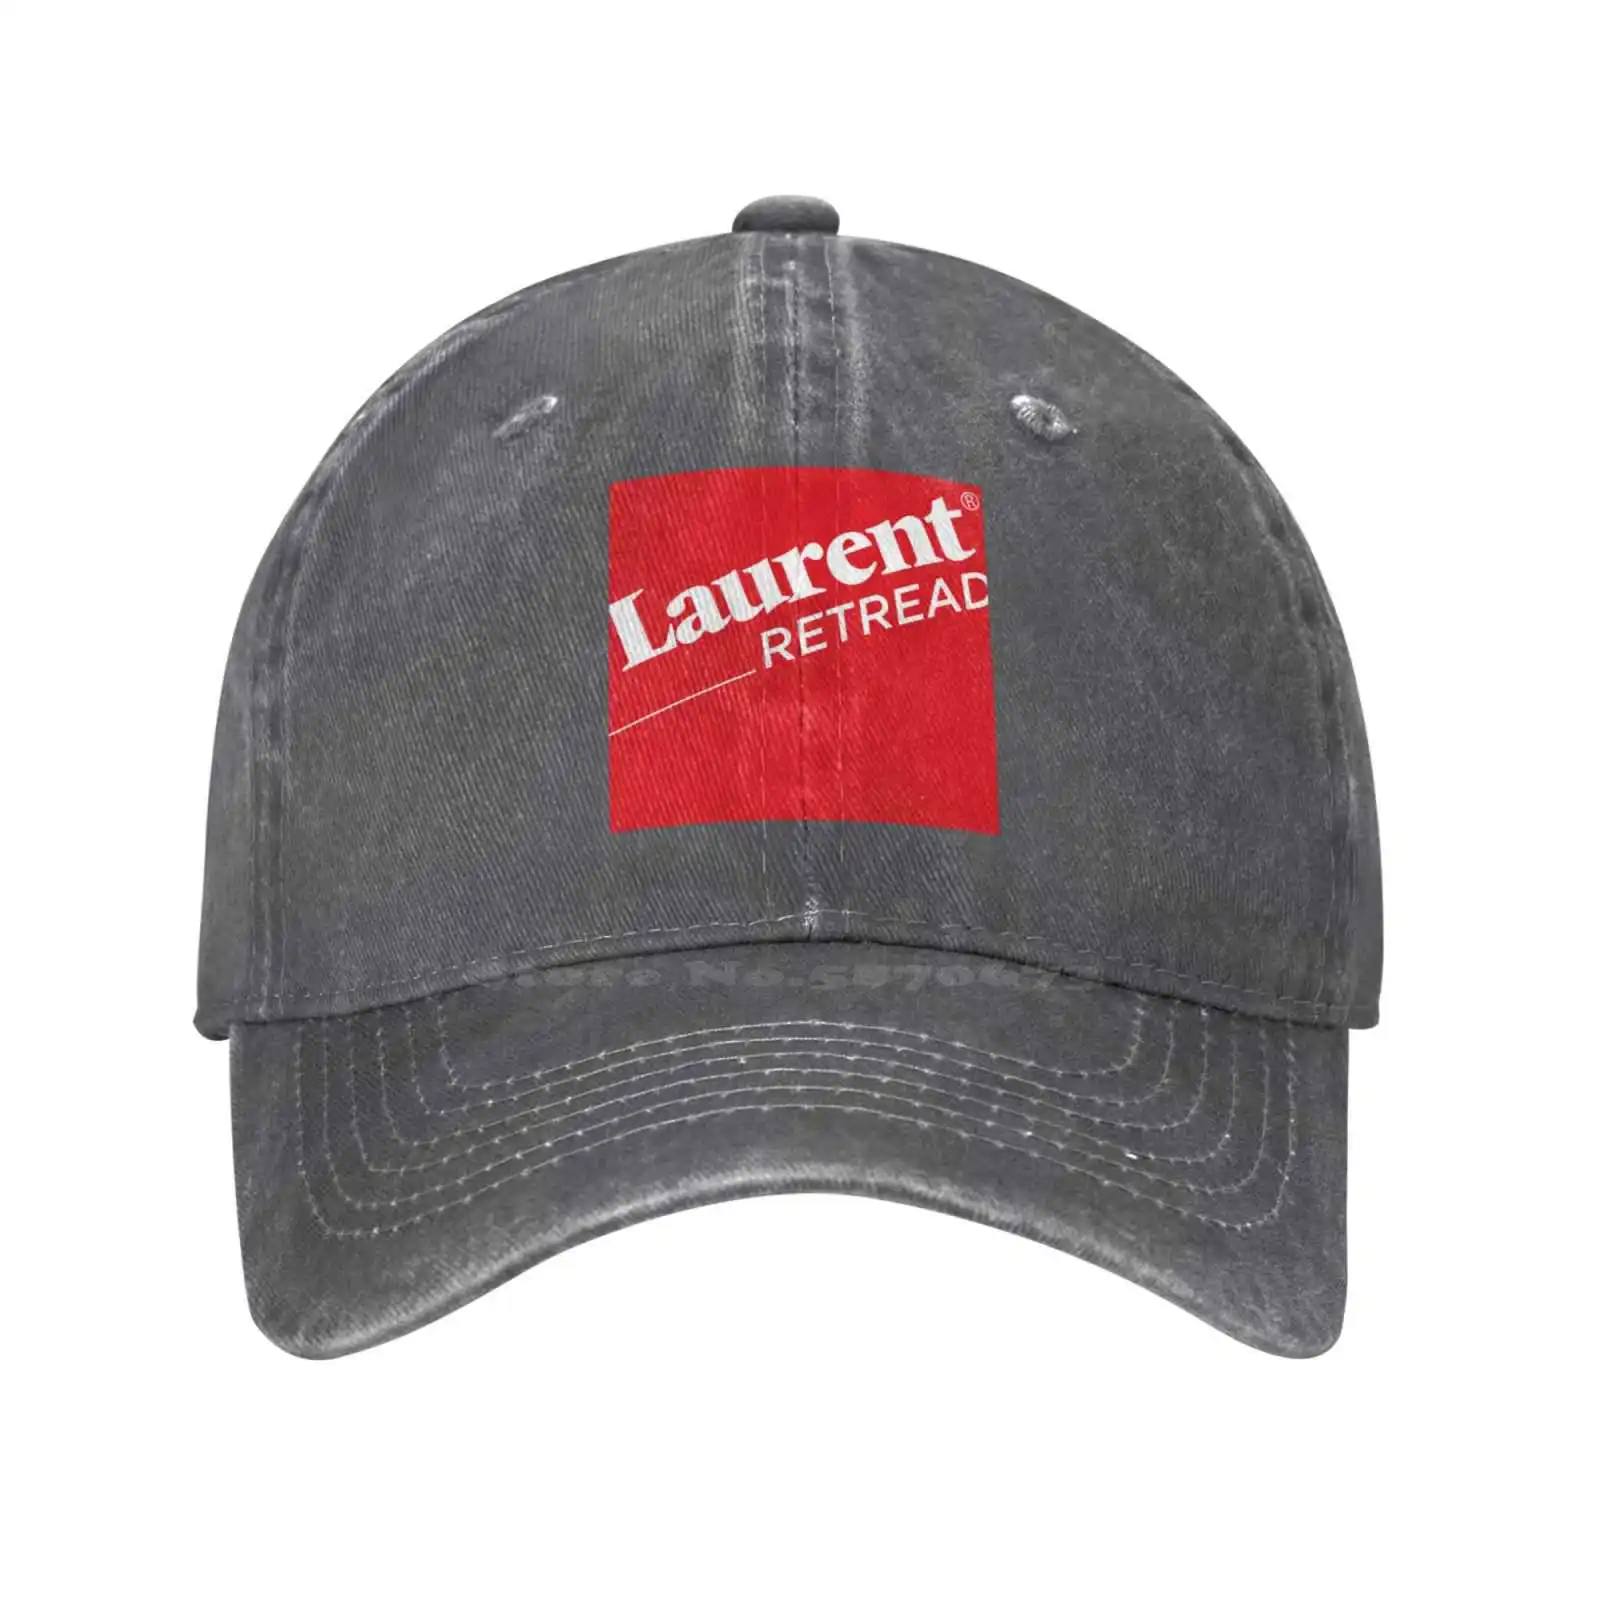 

Pneu Laurent Logo Fashion quality Denim cap Knitted hat Baseball cap